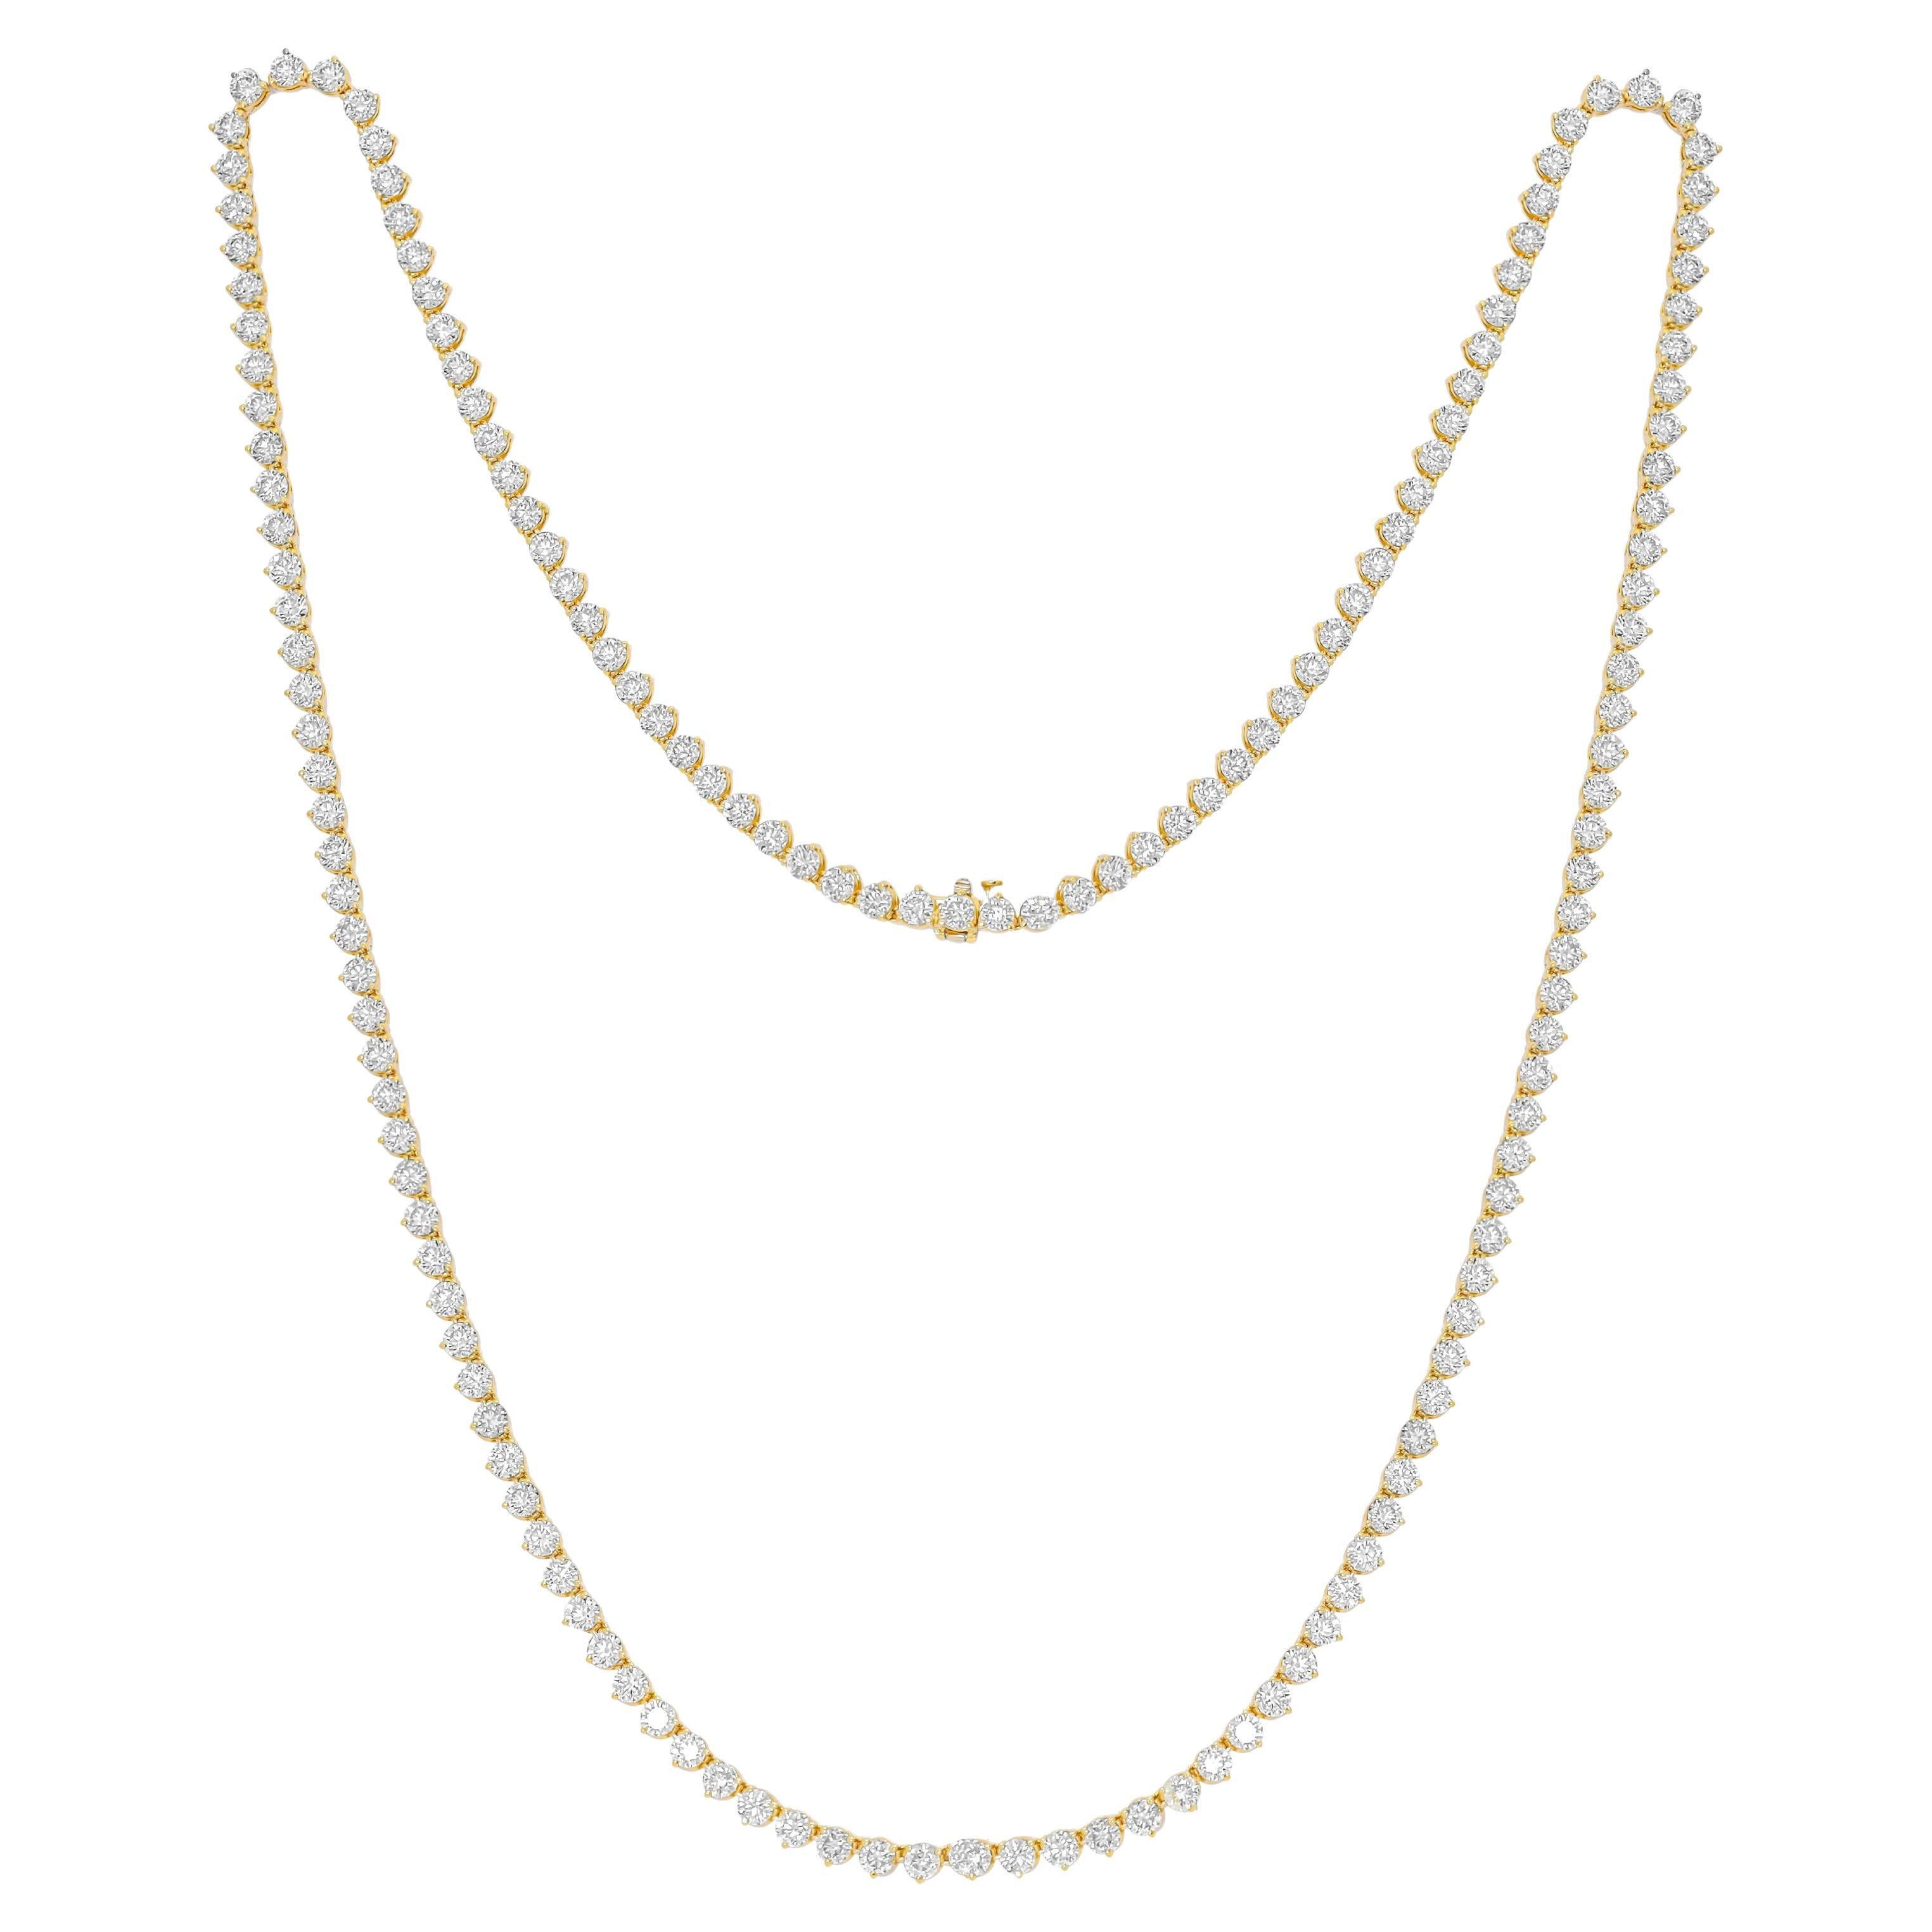 Diana M. 48.65 Ct Long Diamond Tennis Necklace For Sale